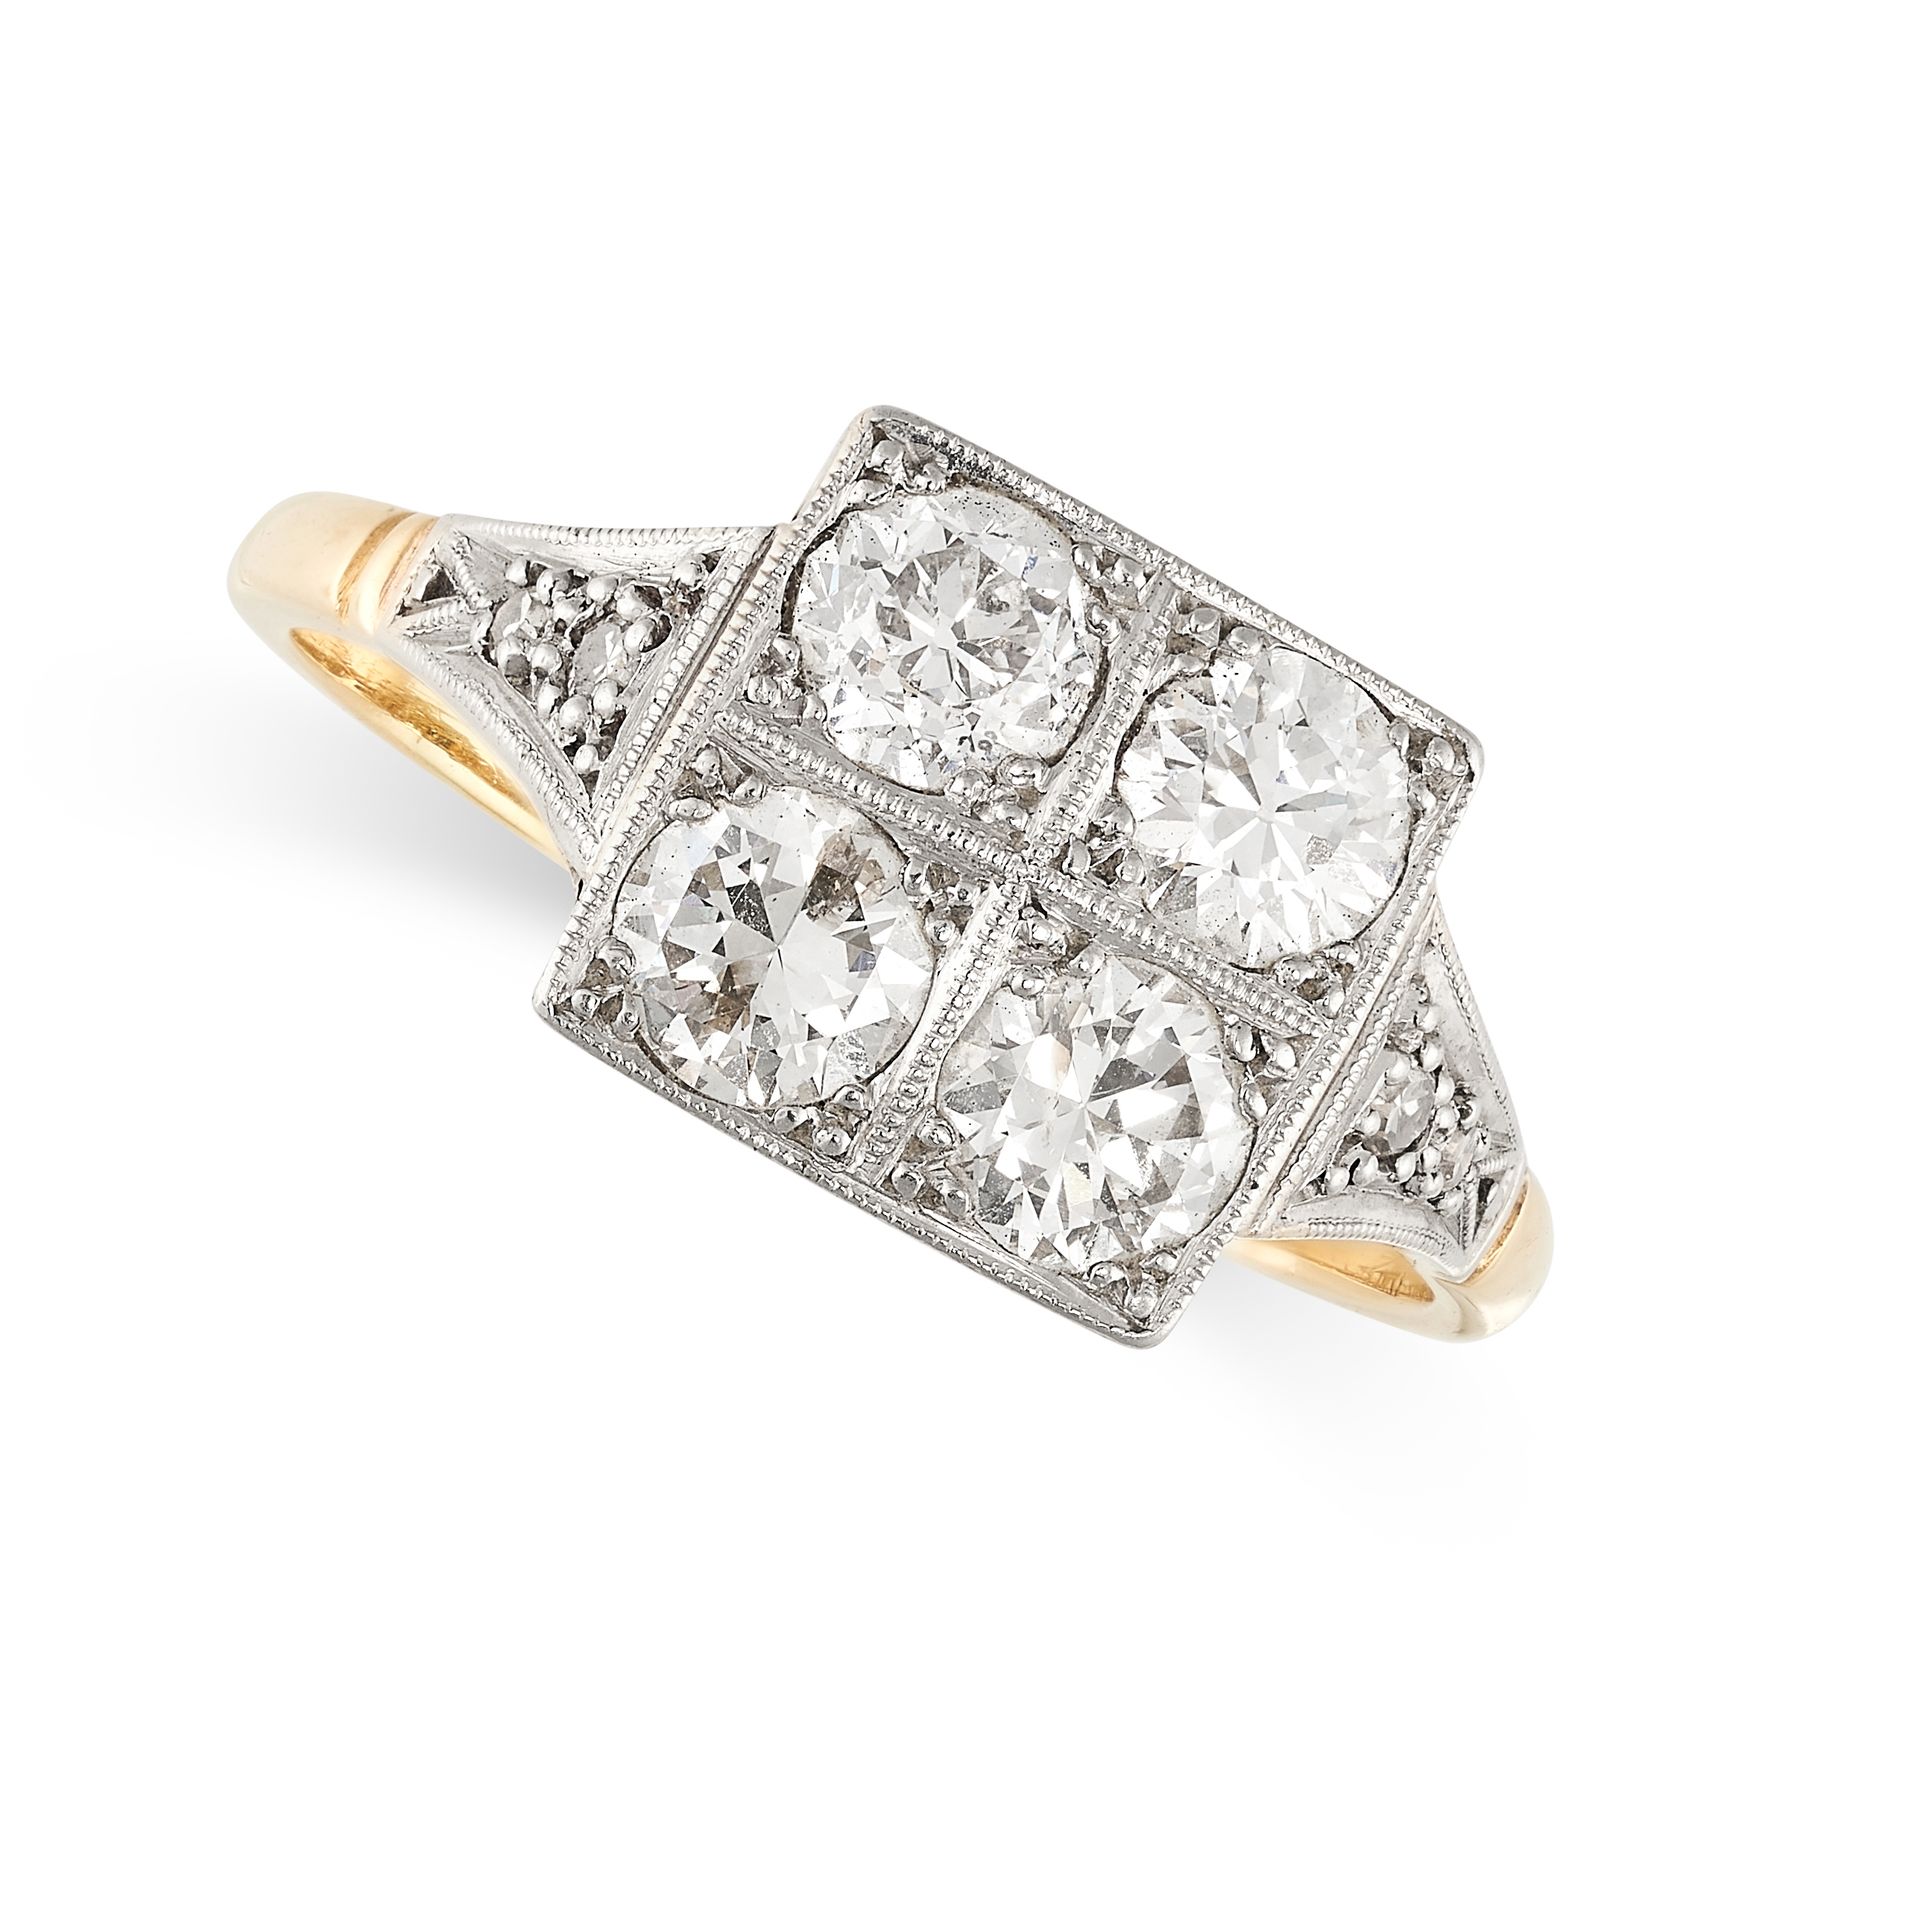 Null 无保留 - 18克拉黄金和铂金装饰钻石礼服戒指，方形表面镶嵌四颗老式切割钻石，肩部有一对渐变的单一切割钻石作点缀，钻石总计1.0-1.1克拉，印有18&hellip;